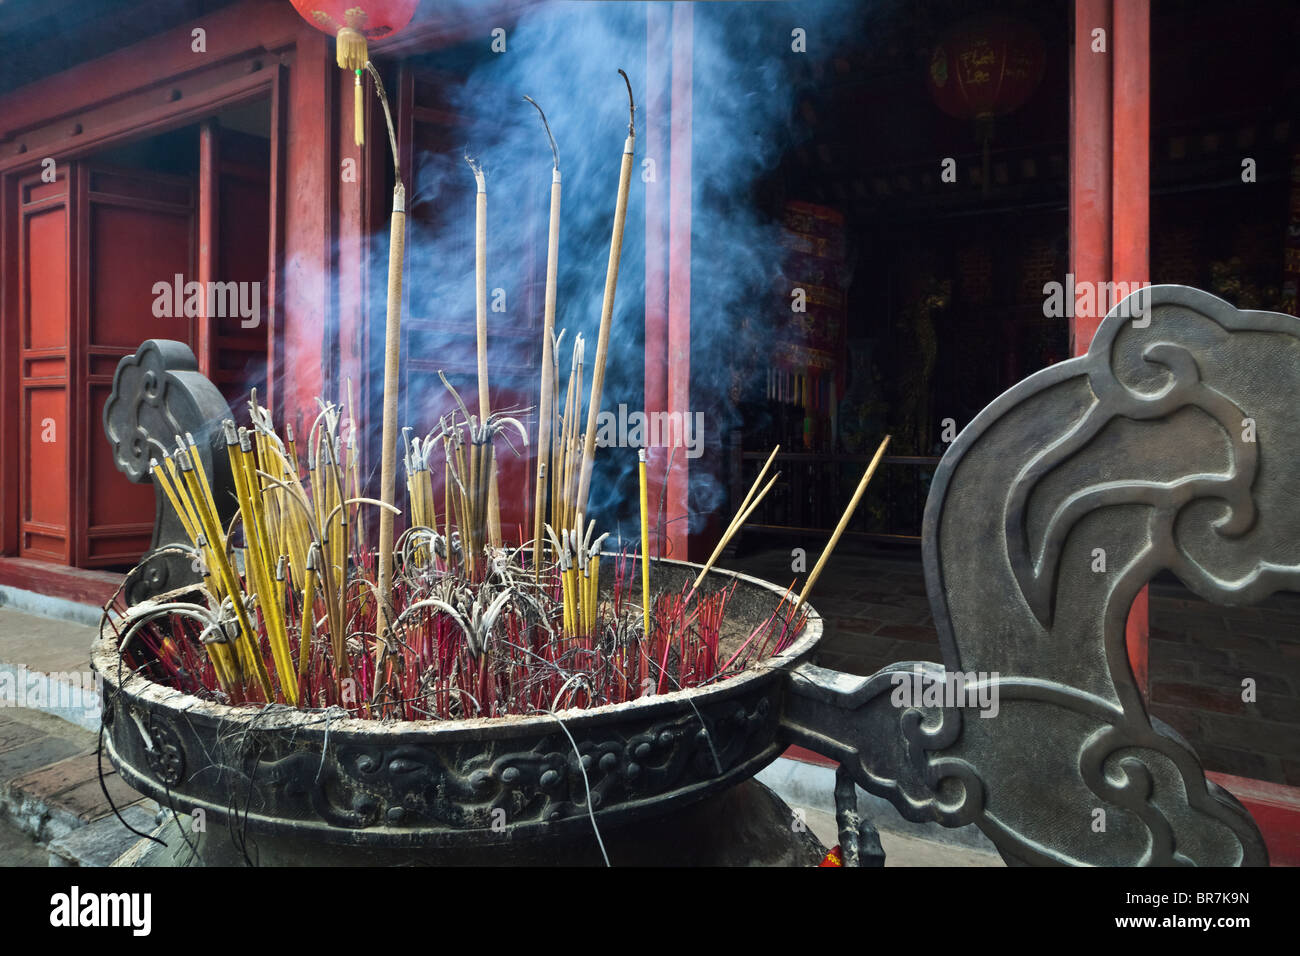 Vietnam, Hanoi, Hoan Kiem Lake, Ngoc Son Temple, incense sticks burning in a huge urn Stock Photo